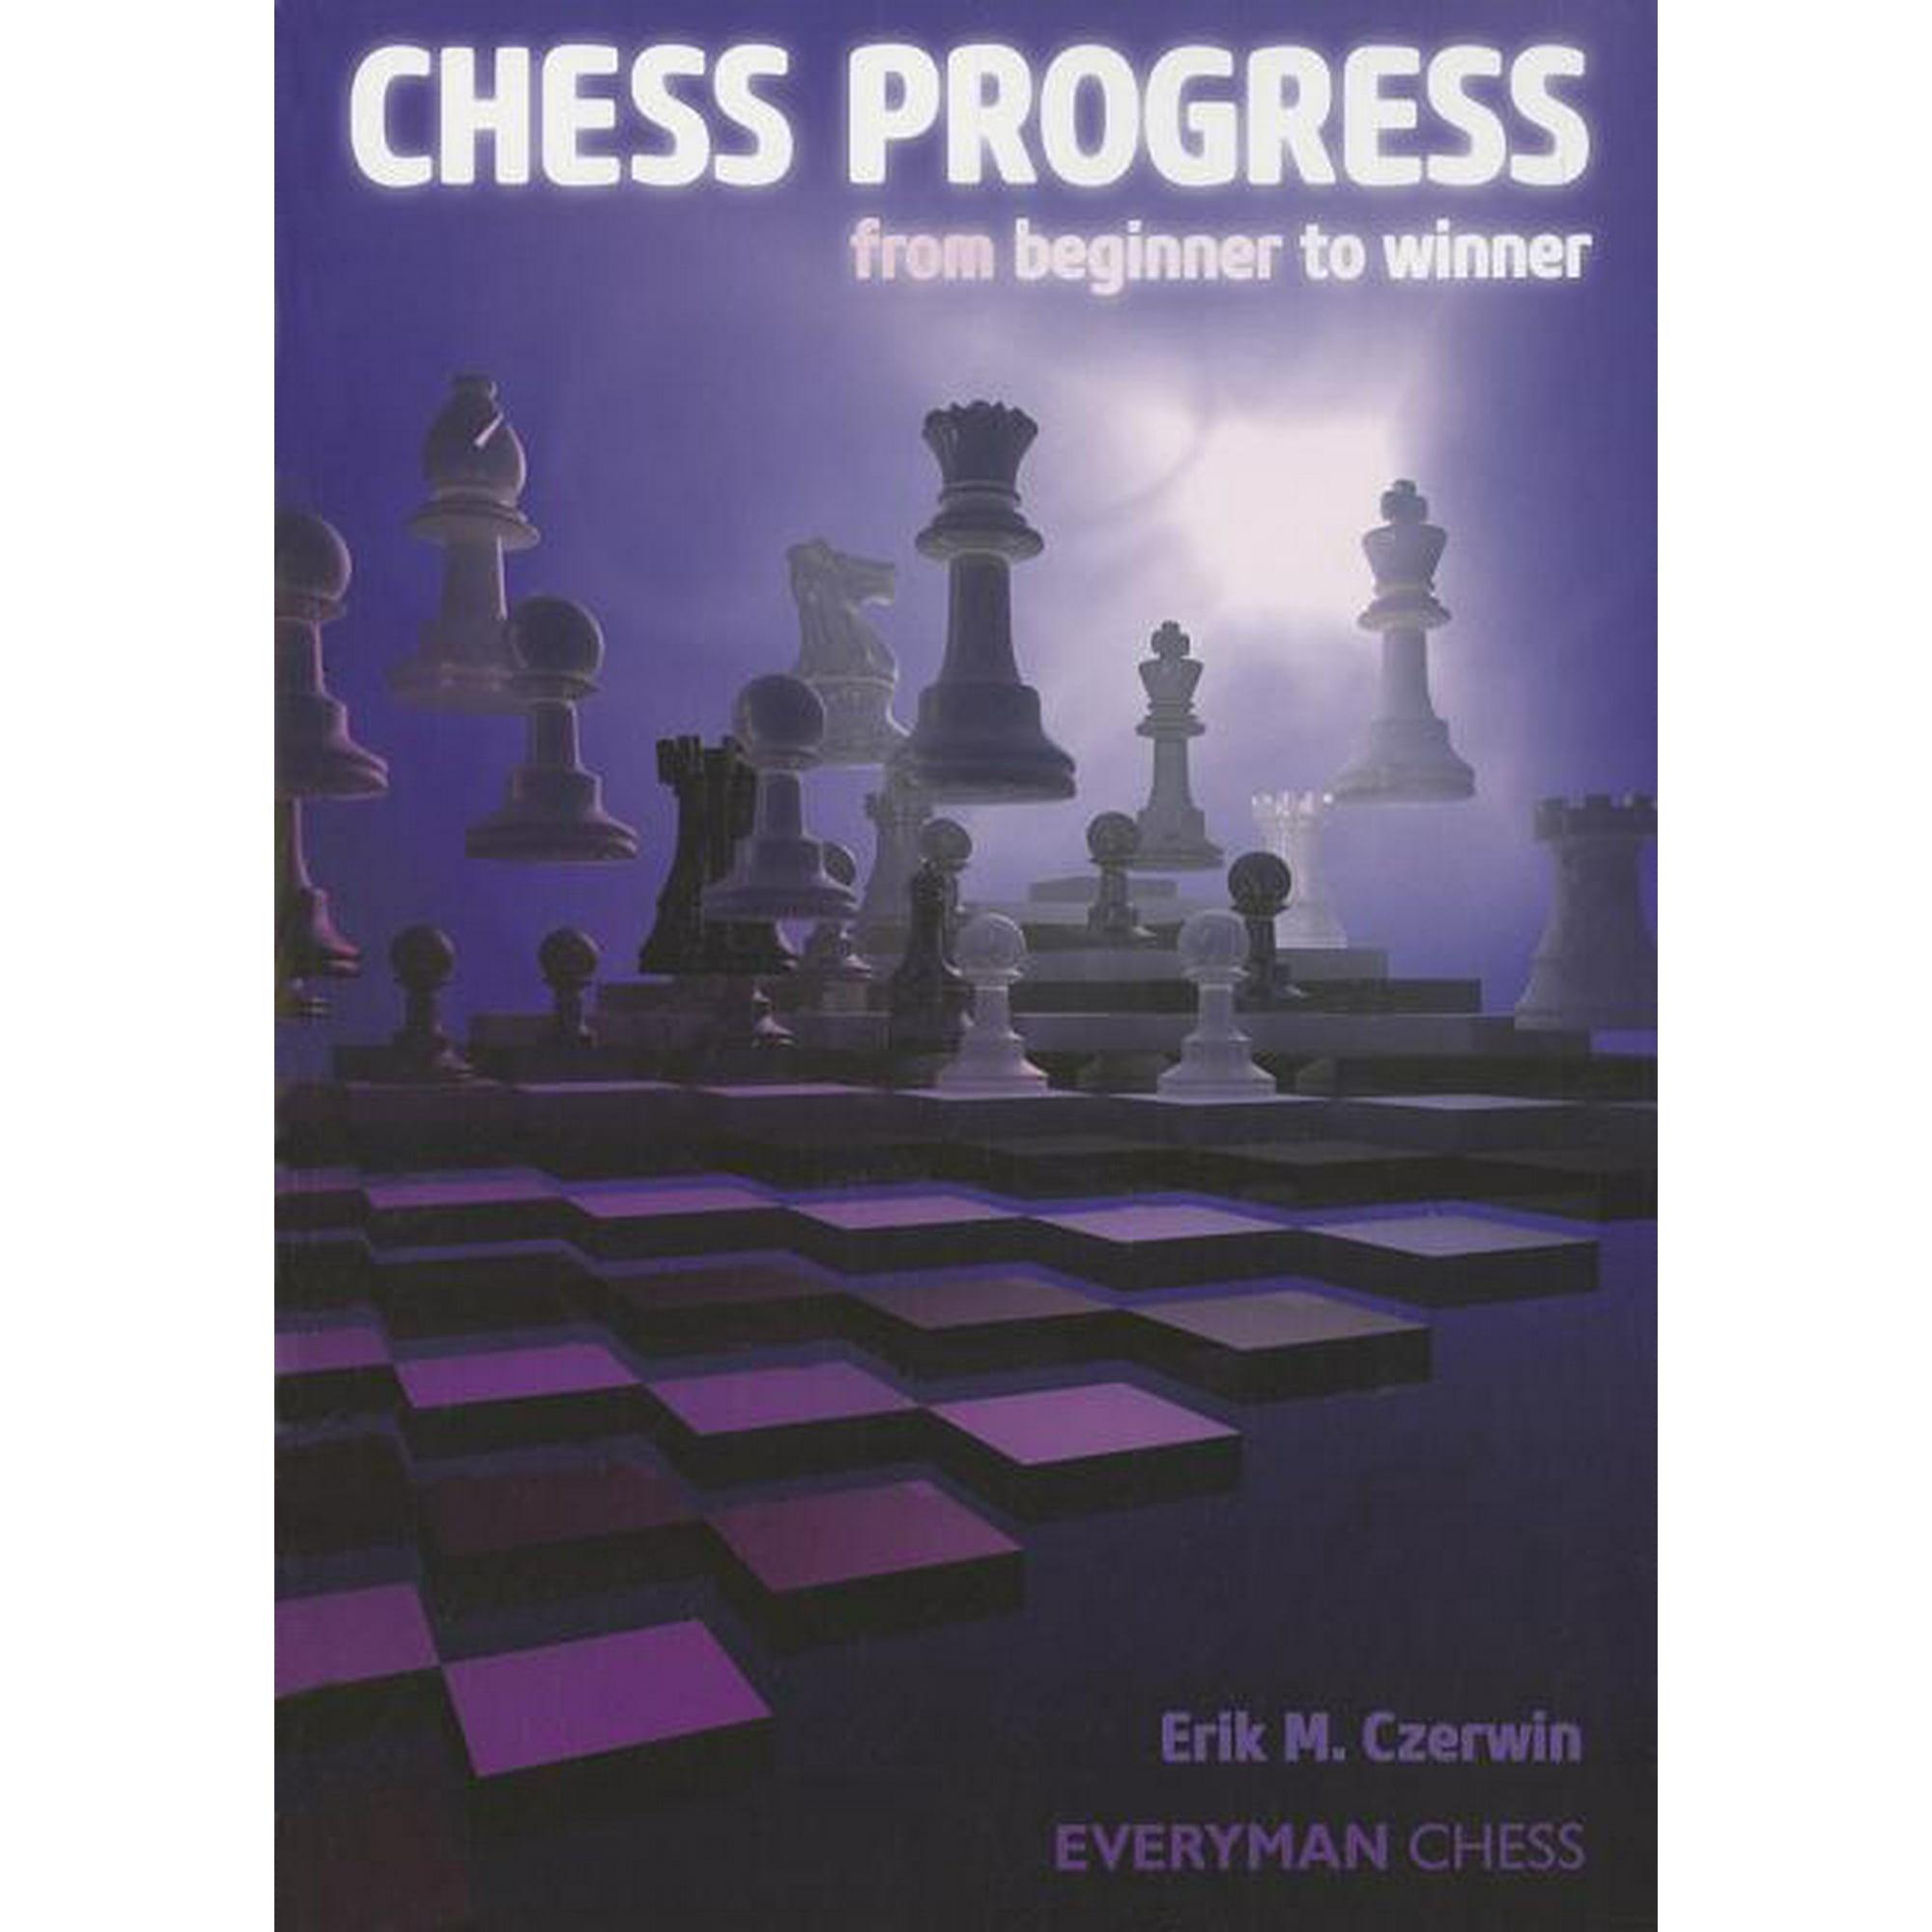 Everyman Chess